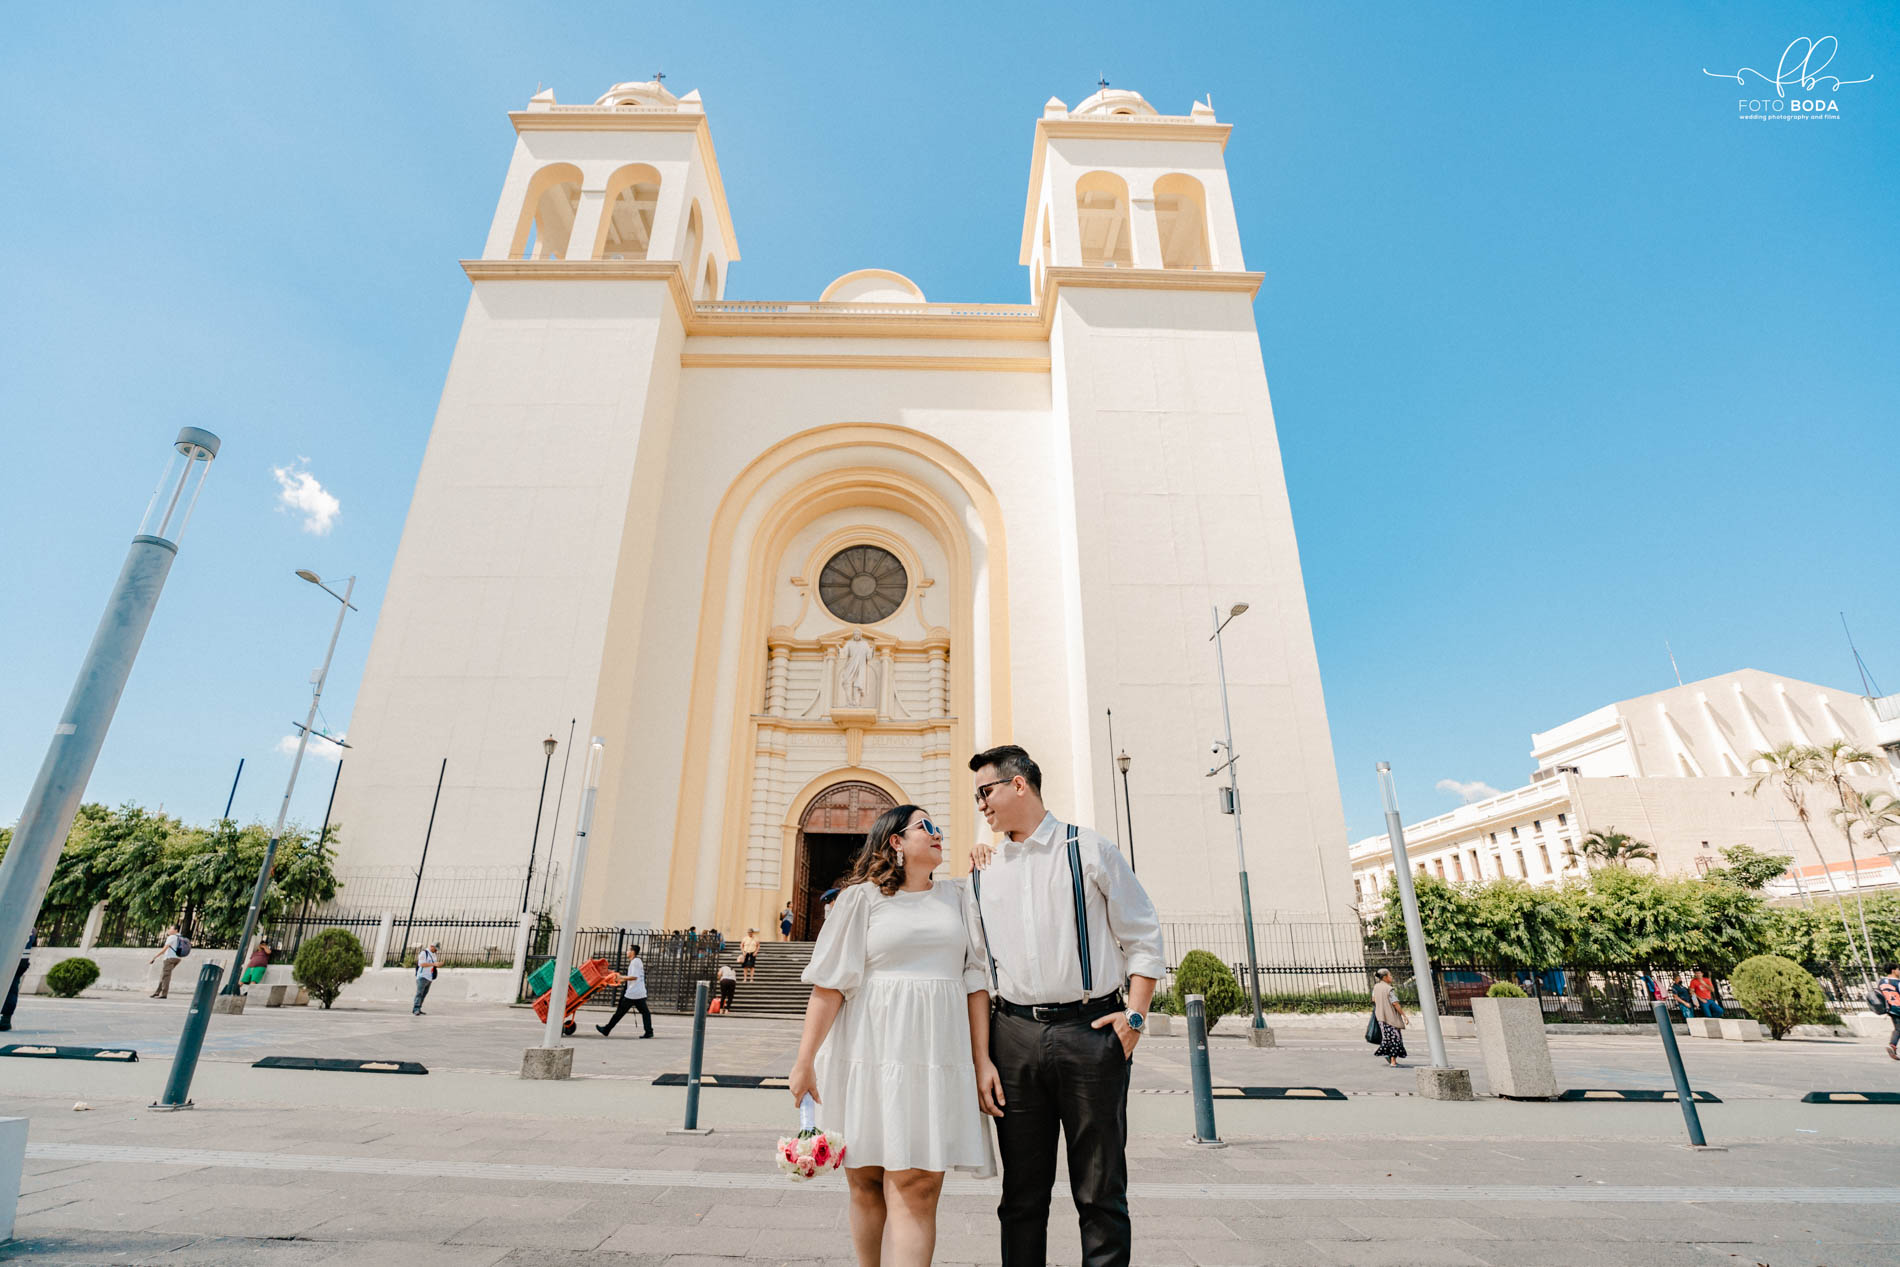 Fotografía de sesión pre boda de pareja en Centro histórico de san salvador